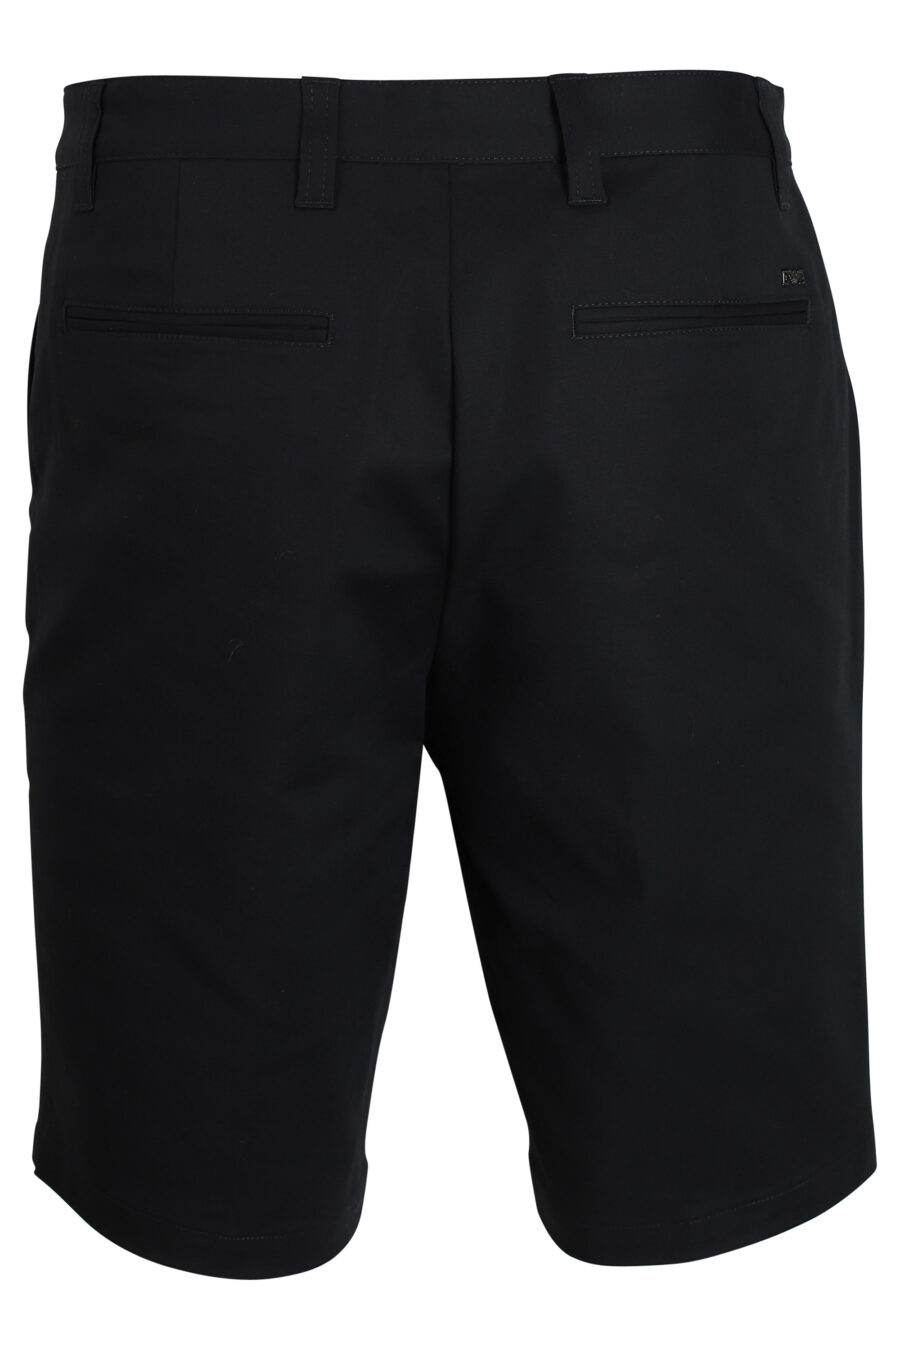 Dunkelblaue Shorts mit Mini-Logo - 8057163302535 3